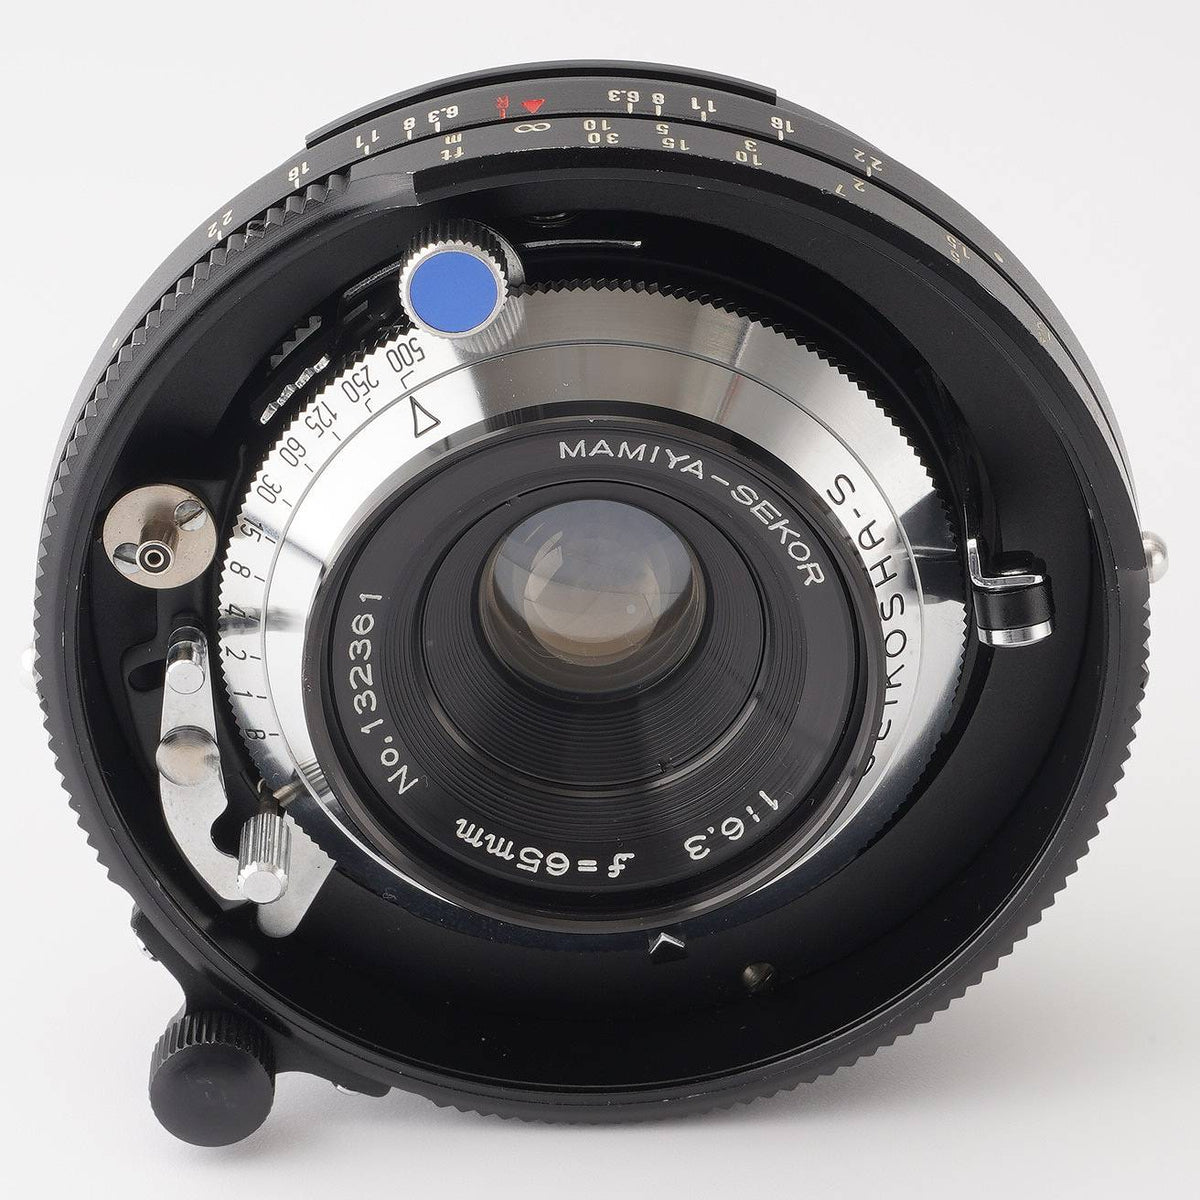 MAMIYA MAMIYA-SEKOR 65mm F6.3 - カメラ、光学機器